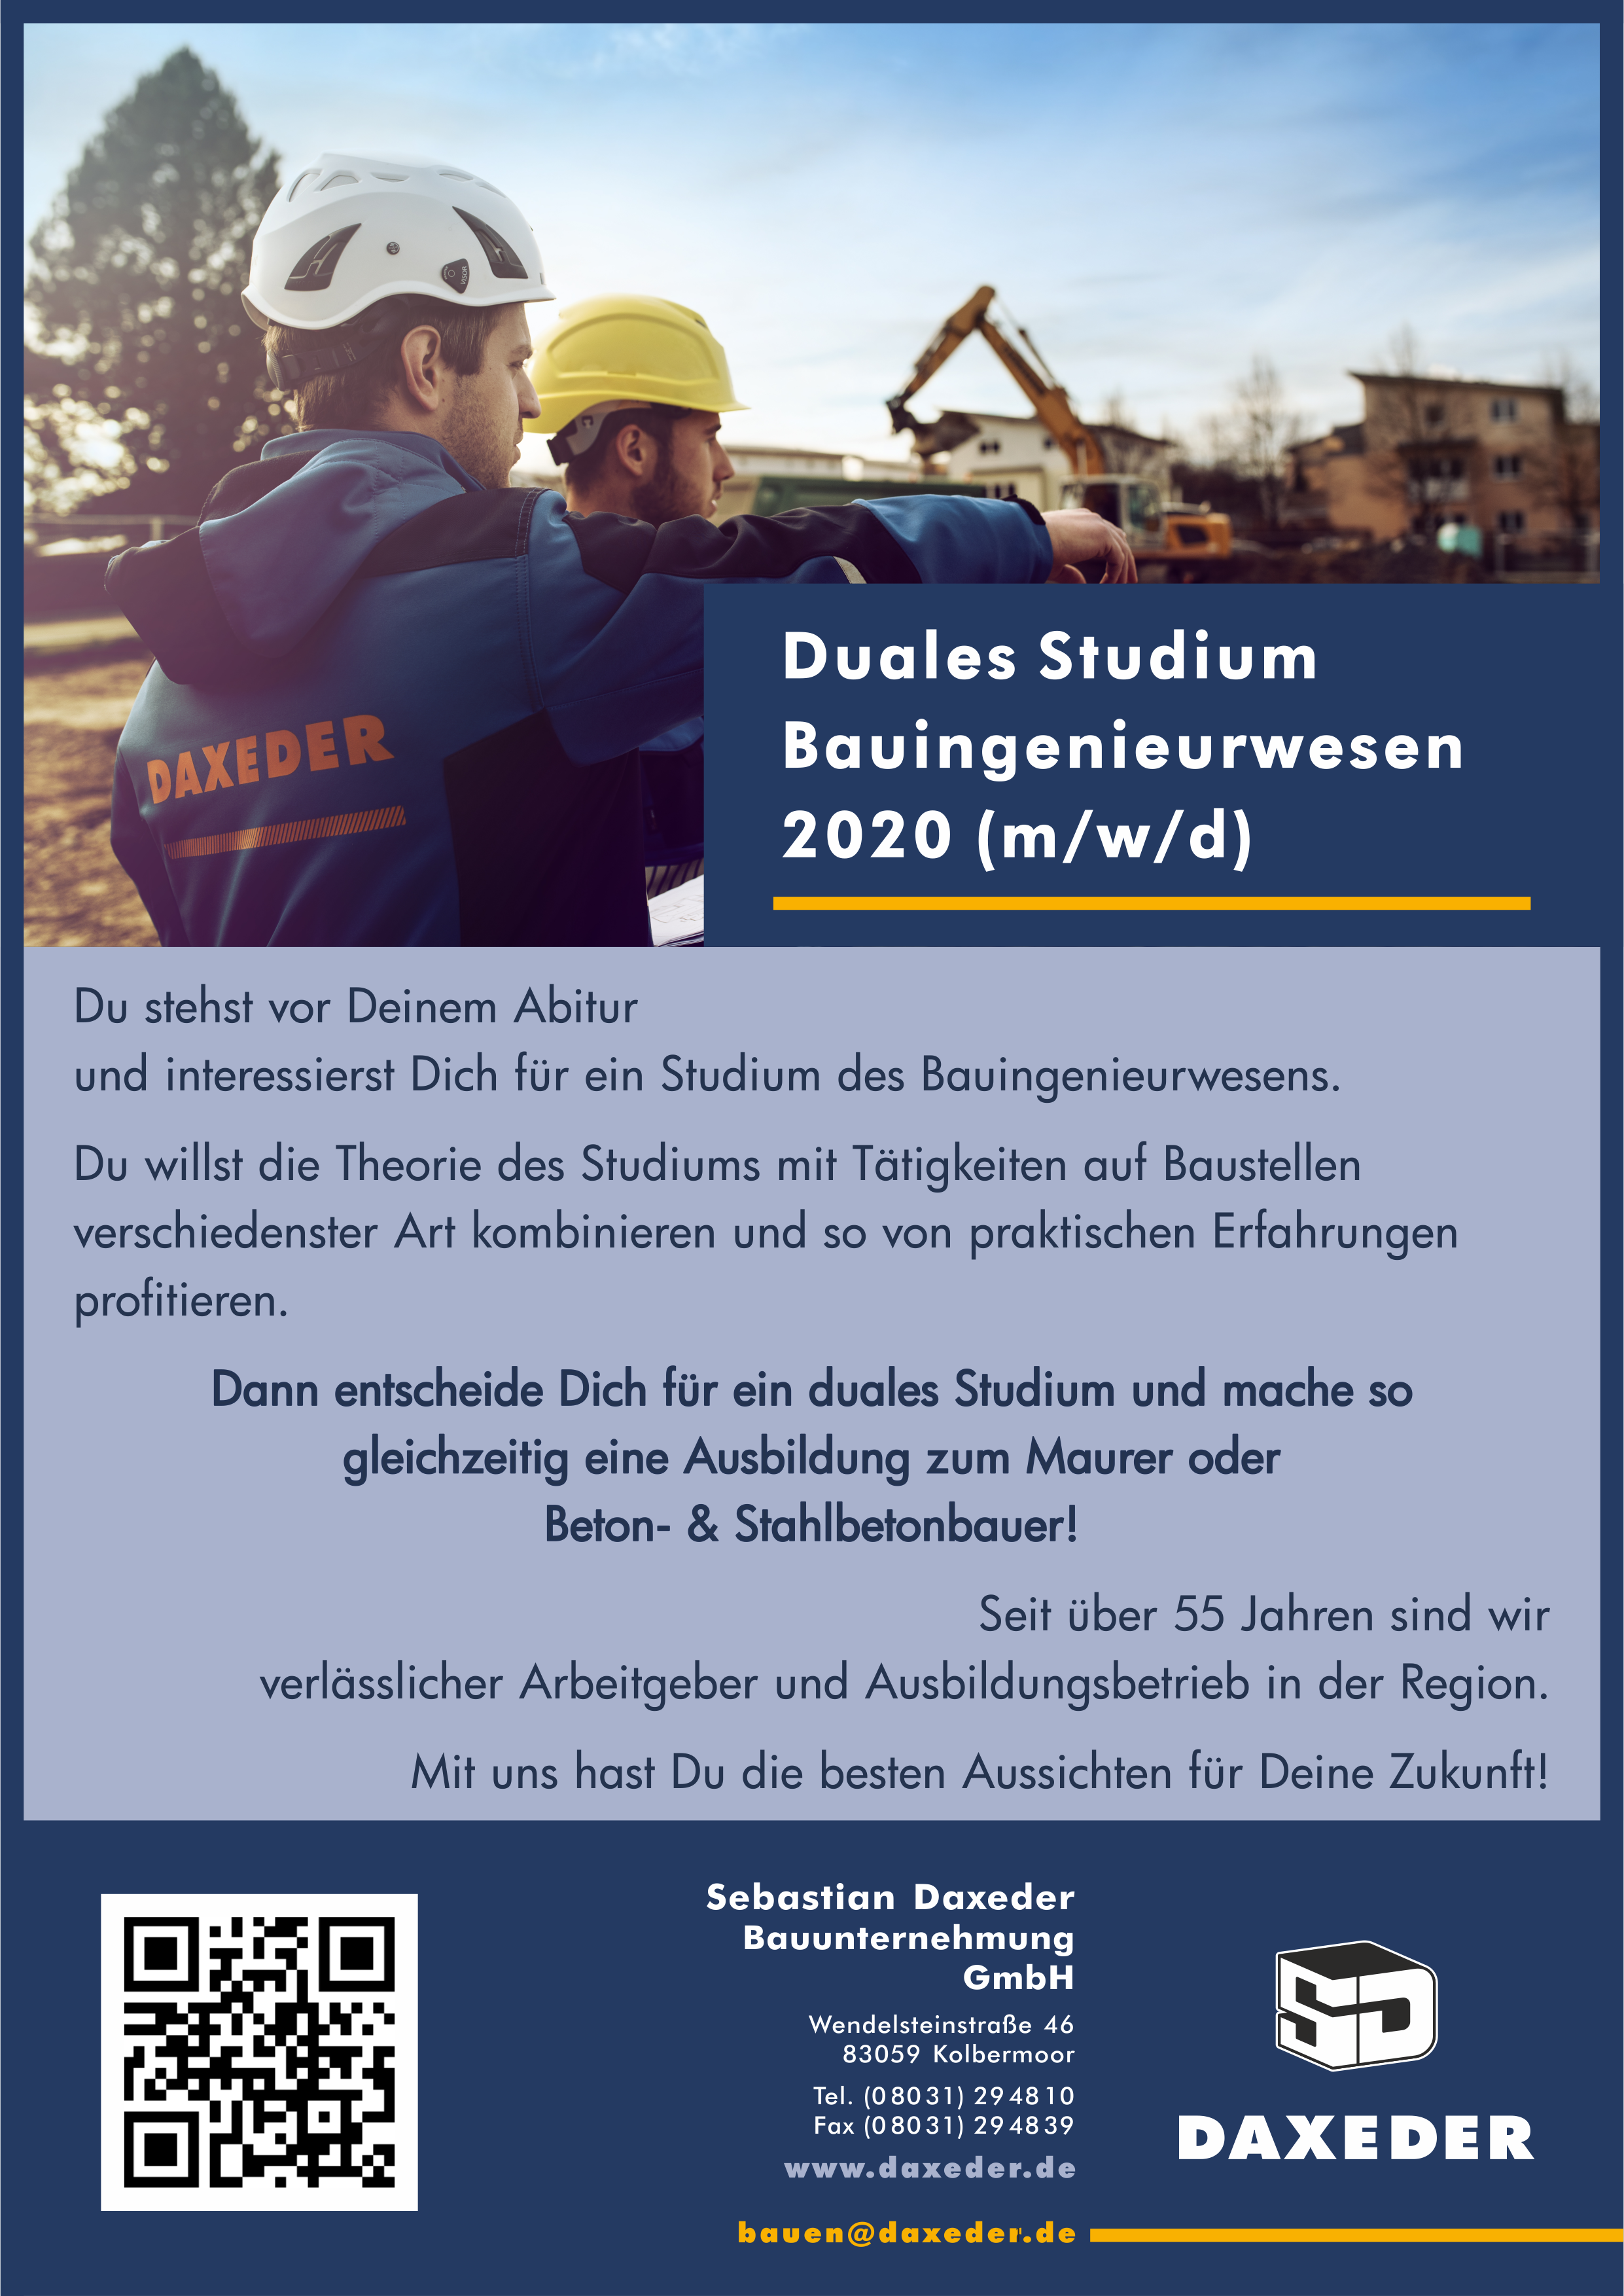 Sebastian Daxeder Bauunternehmung GmbH, Duales Studium Bauingenieurwesen 2020